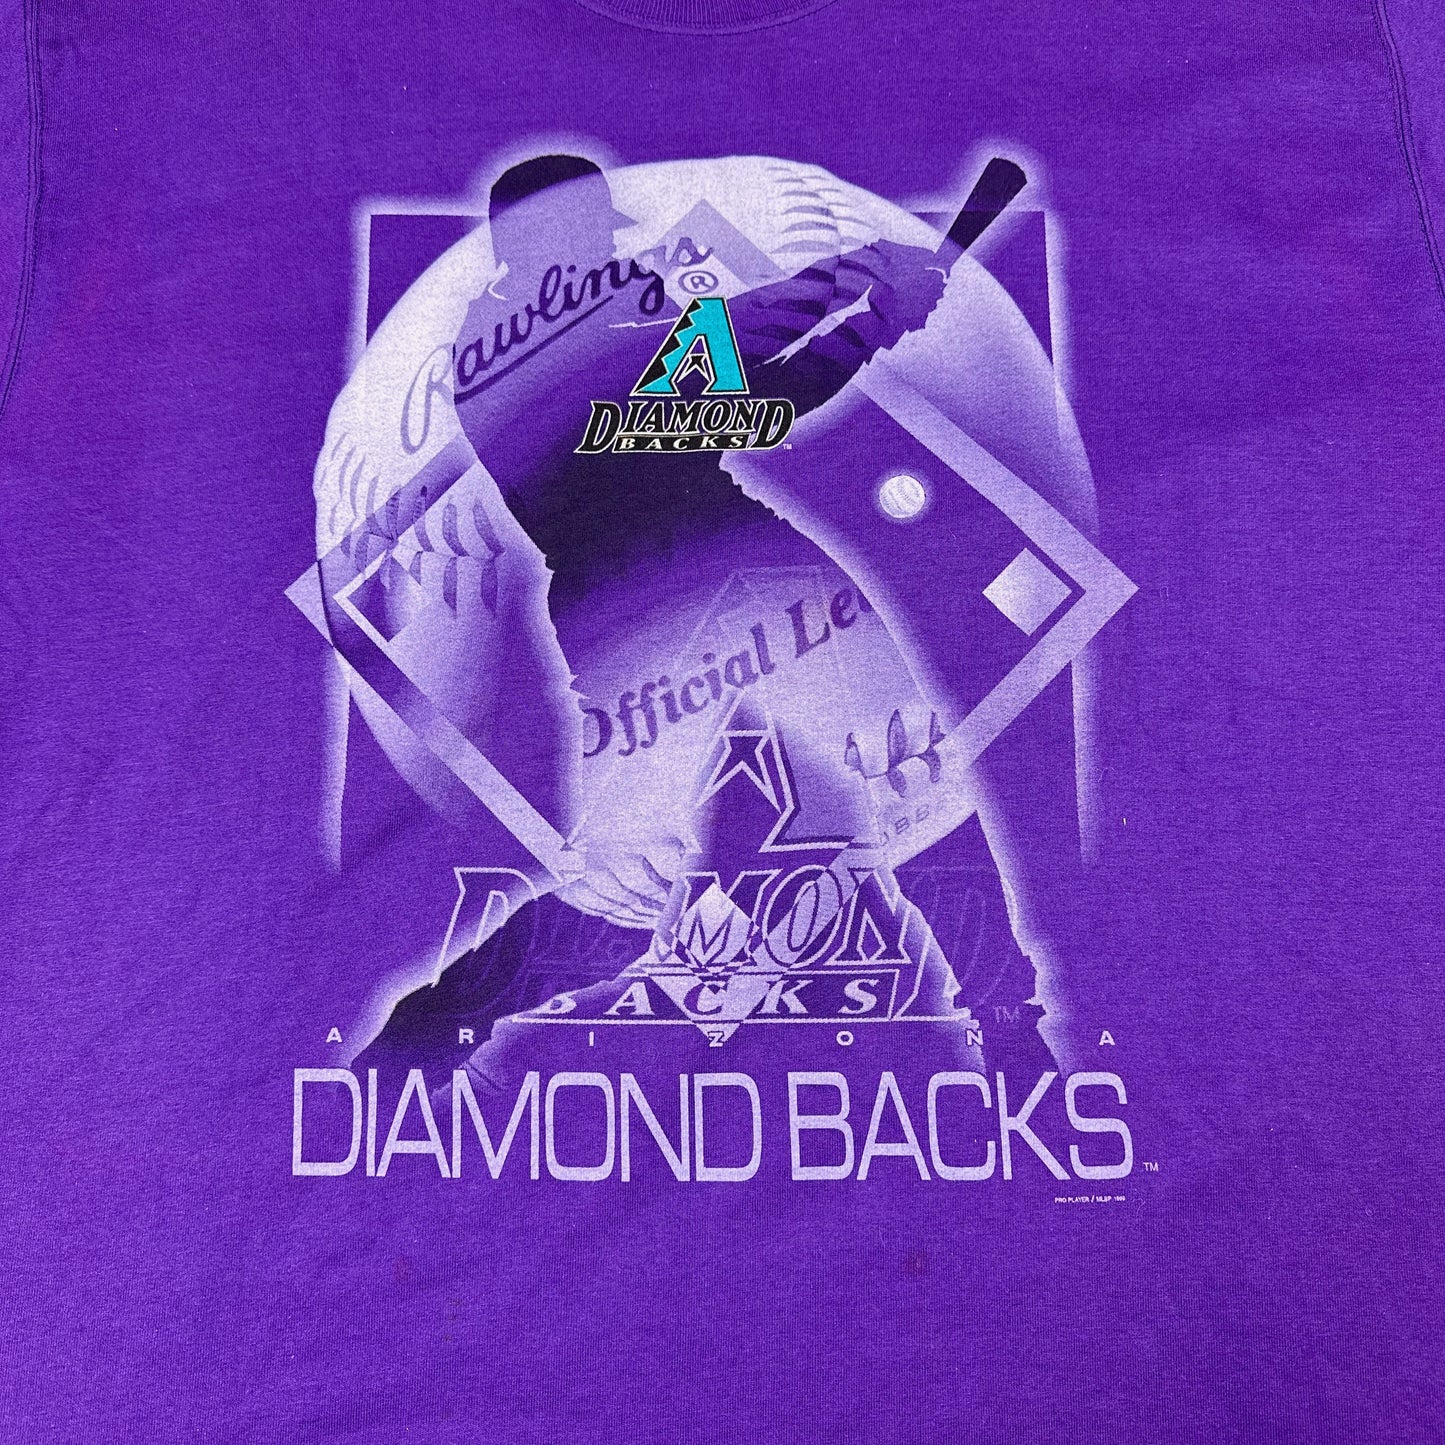 Vintage Arizona Diamondbacks 1999 Pro Player Purple Tee